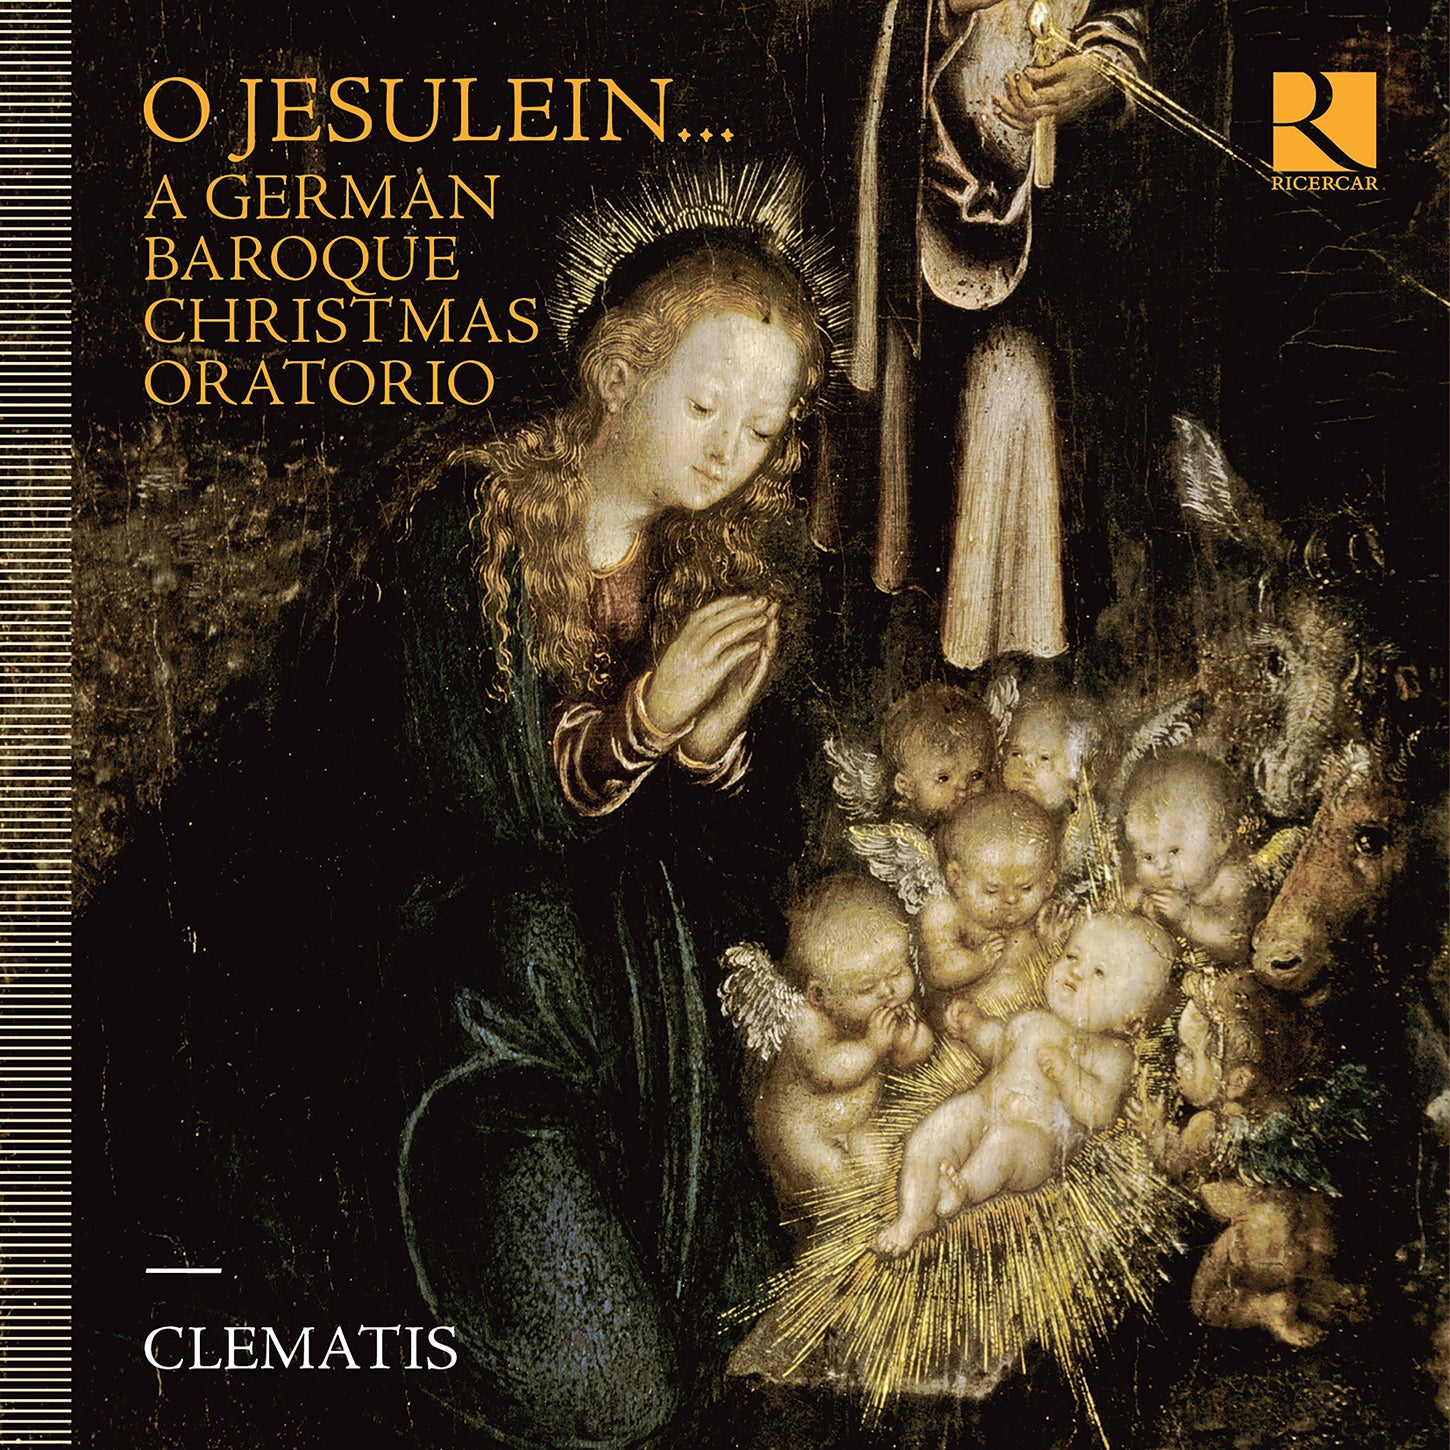 O Jesulein...A German Baroque Christmas Oratorio / Clematis